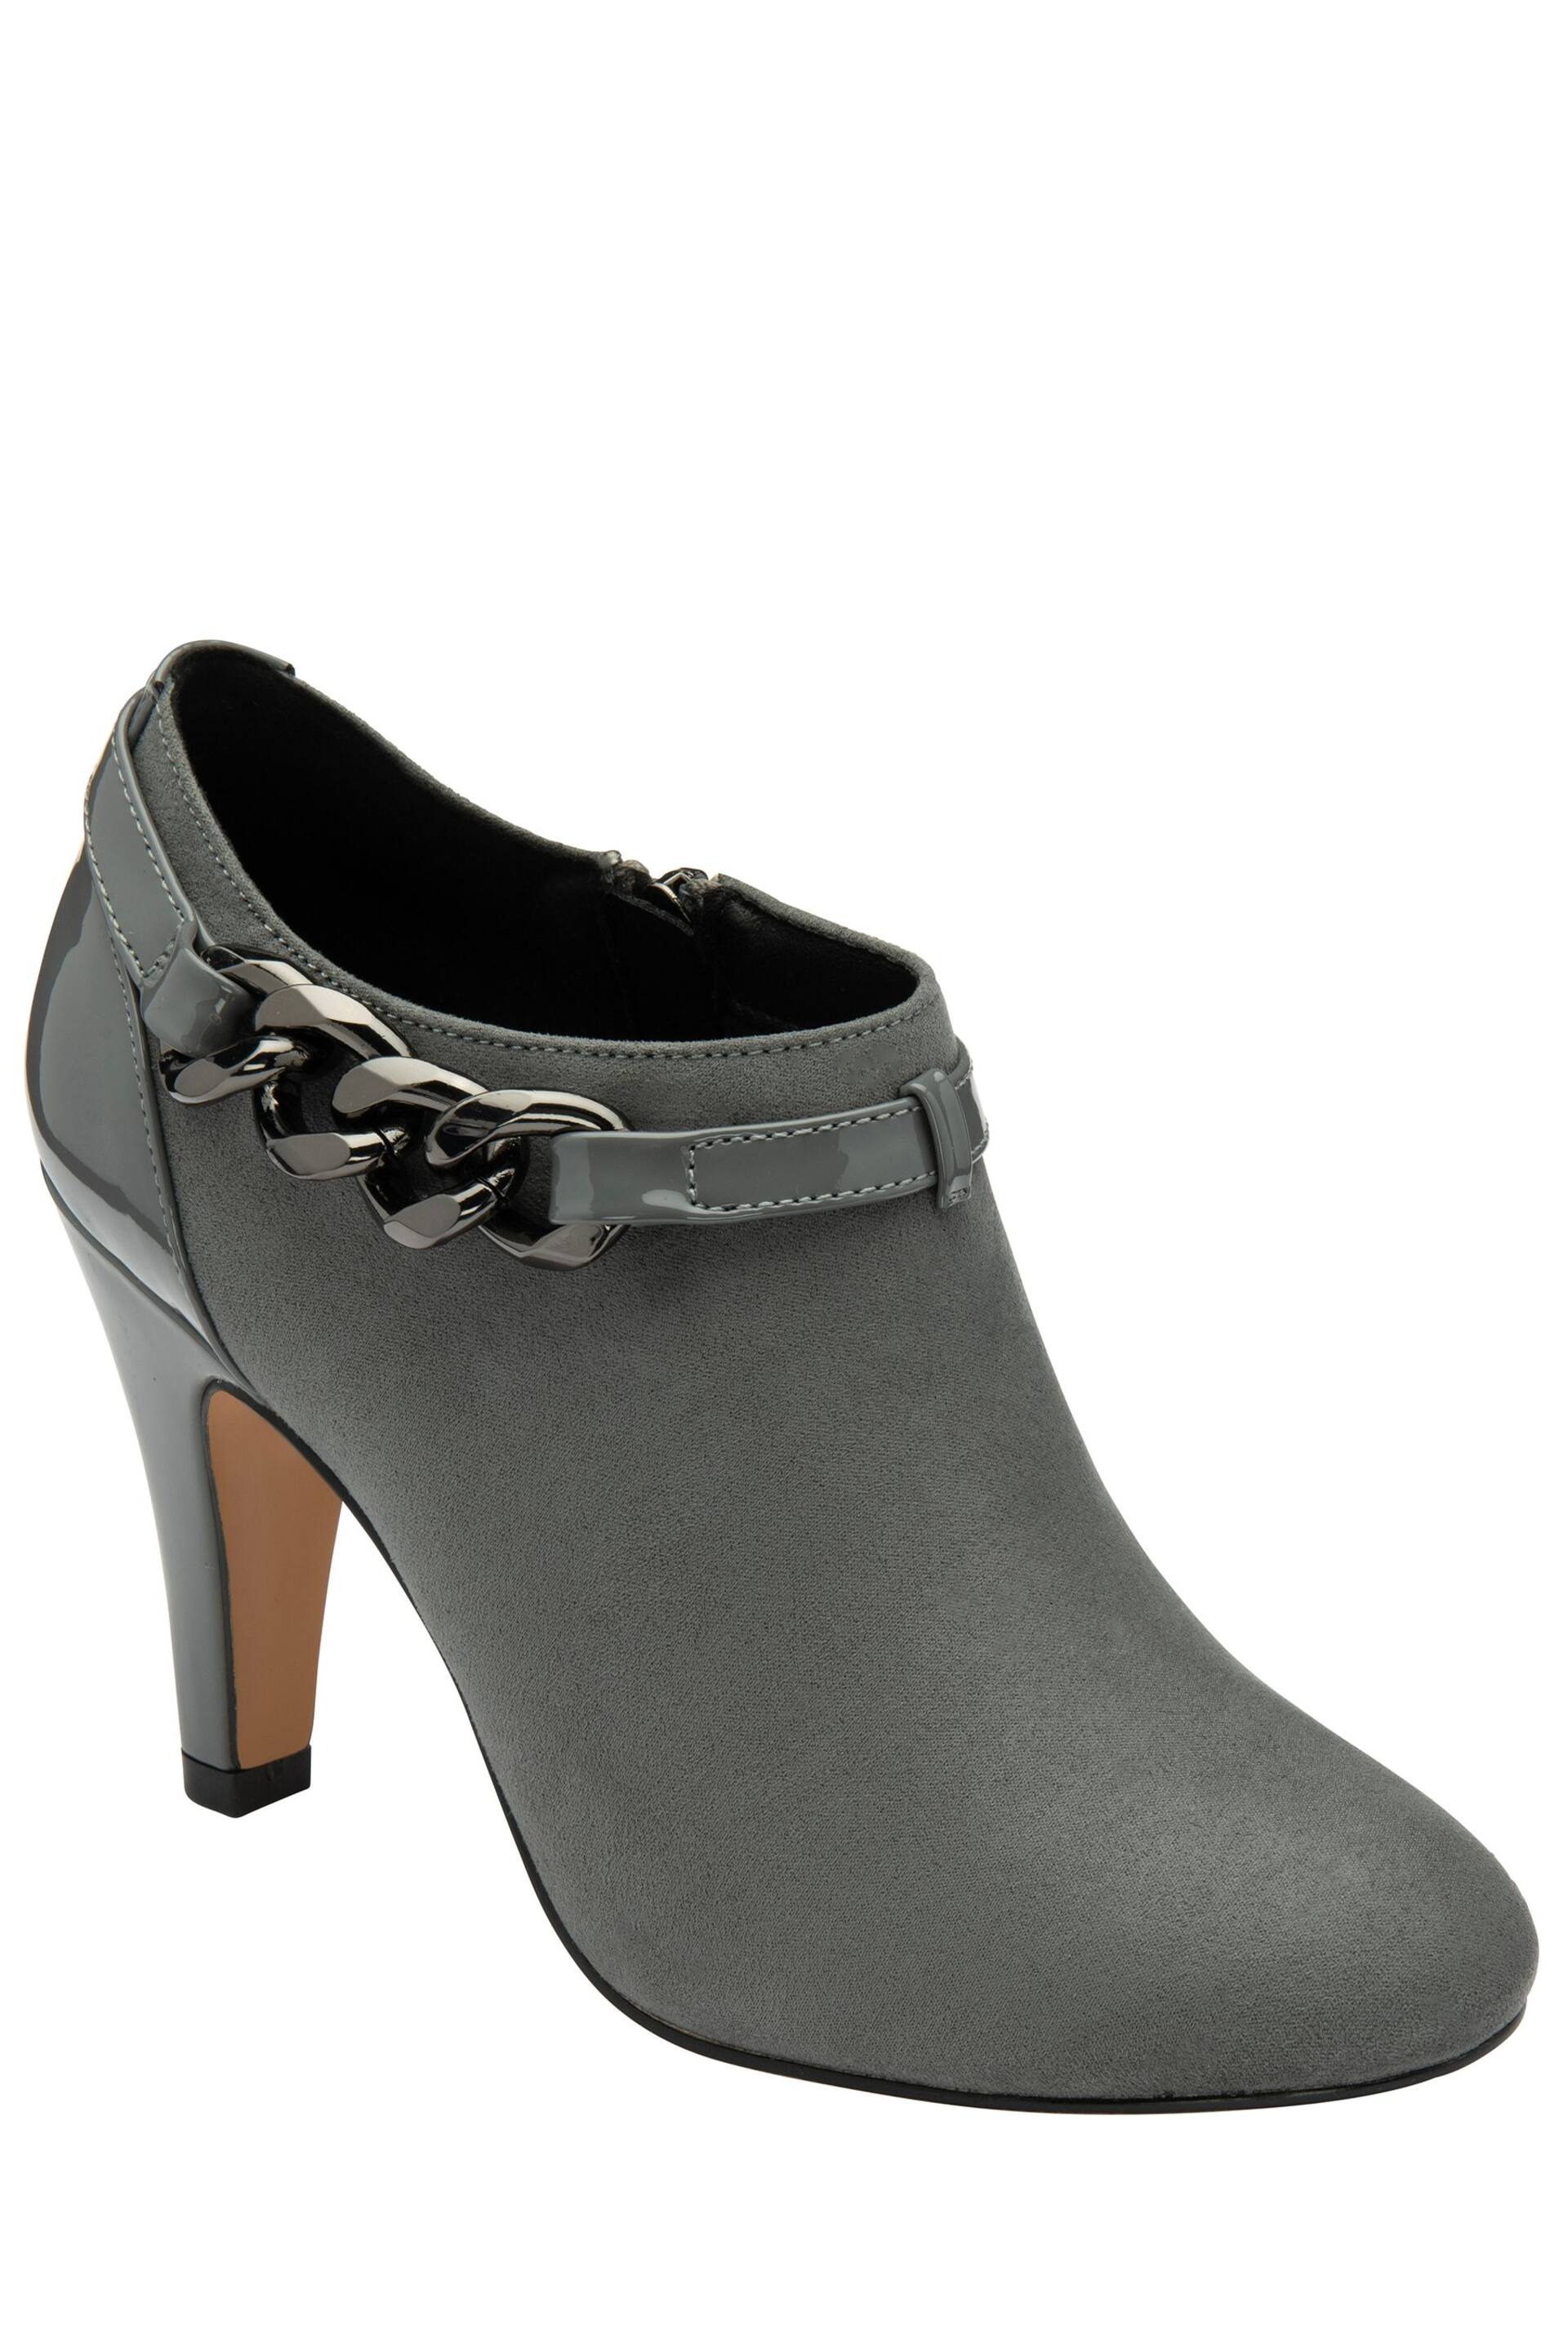 Lotus Grey Heeled Shoe Boots - Image 1 of 4